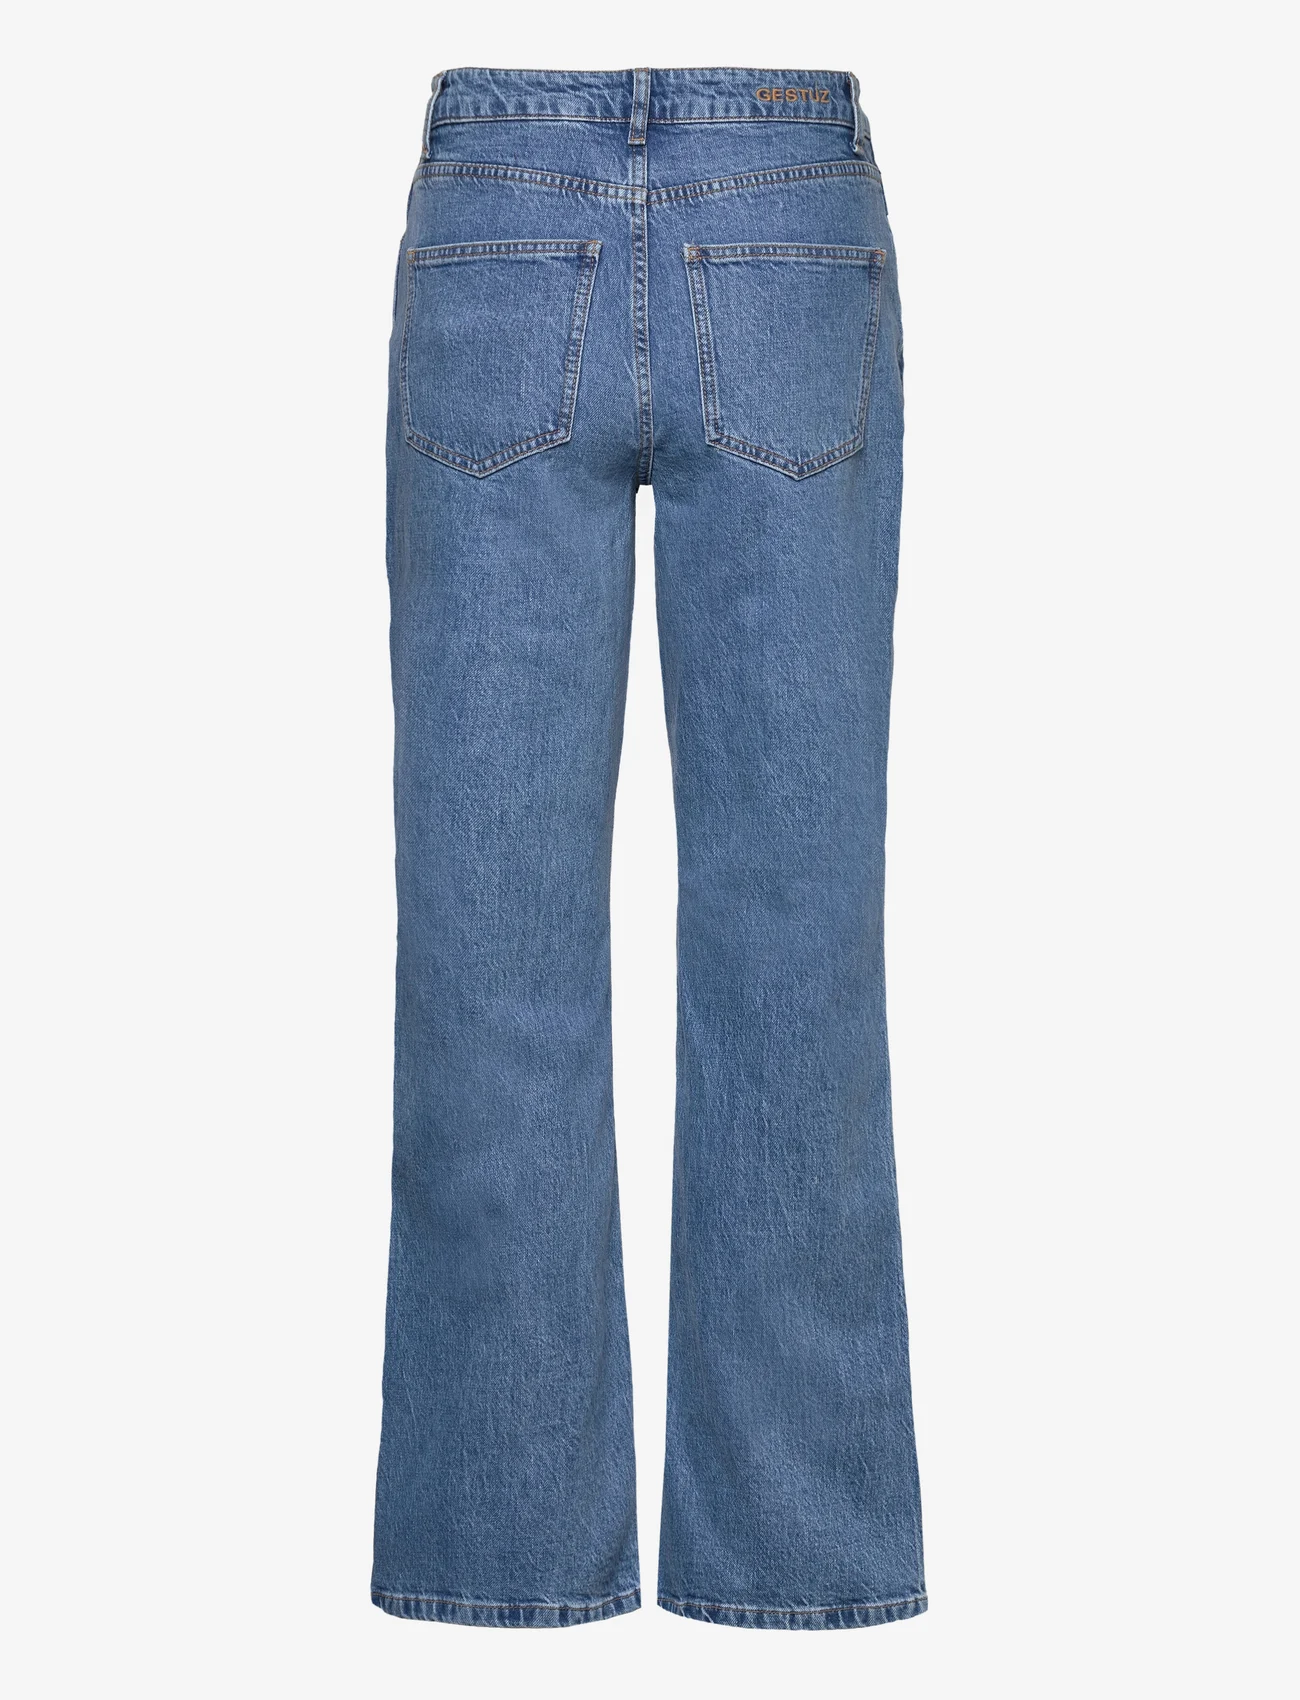 Gestuz - LucieGZ HW straight jeans NOOS - suorat farkut - mid dark blue washed - 1